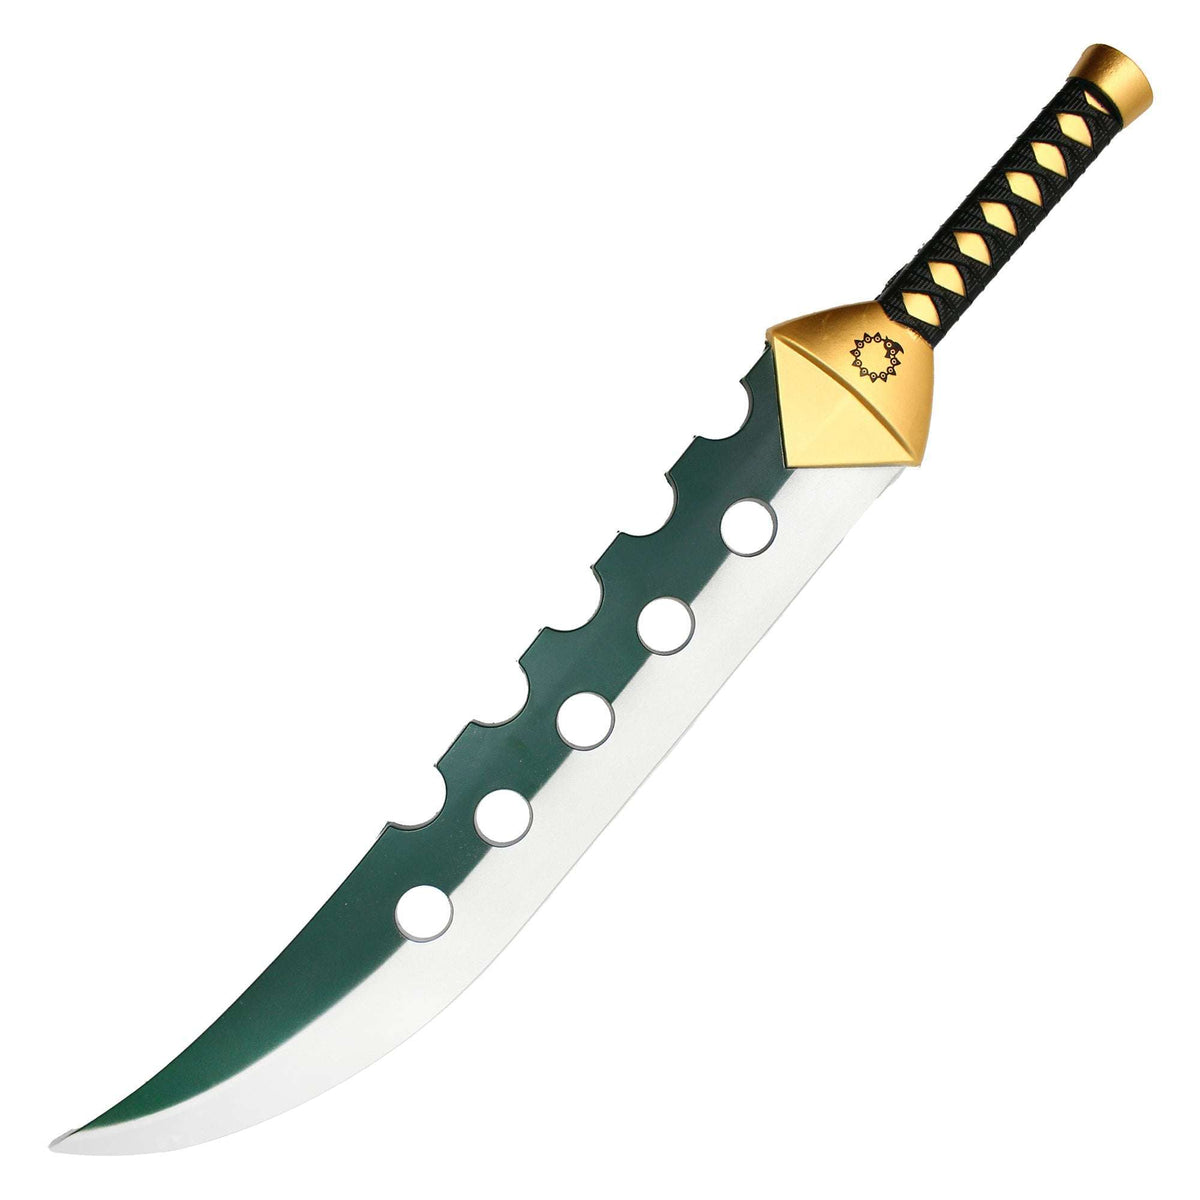 29" Anime Green Serrated Foam Sword